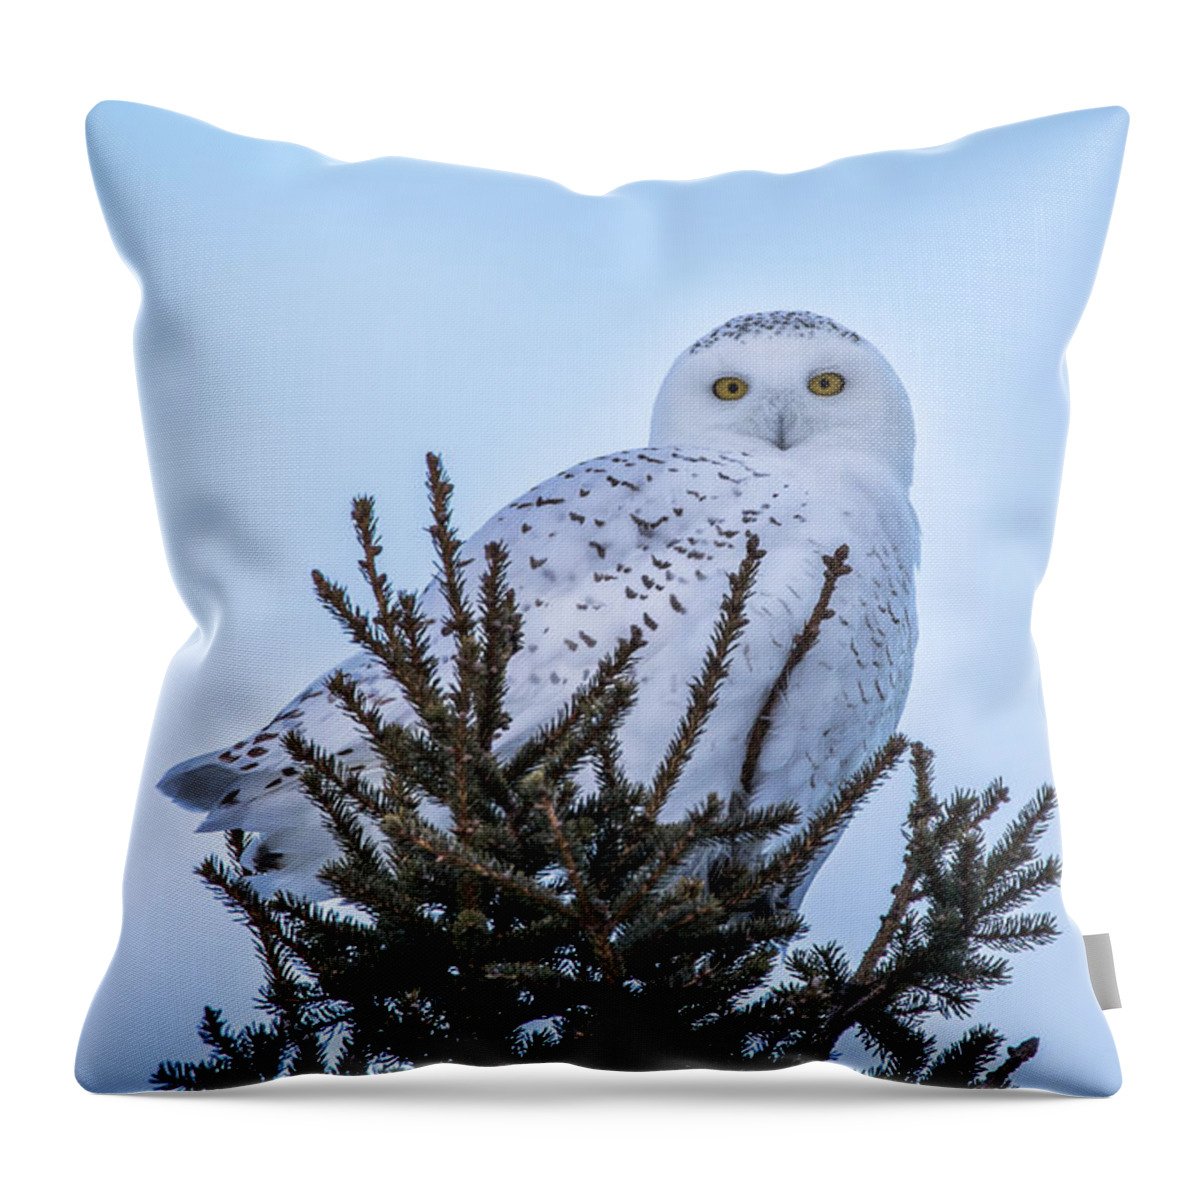 Wildlife Throw Pillow featuring the photograph Wildlife Snowy Owl -3408 by Norris Seward